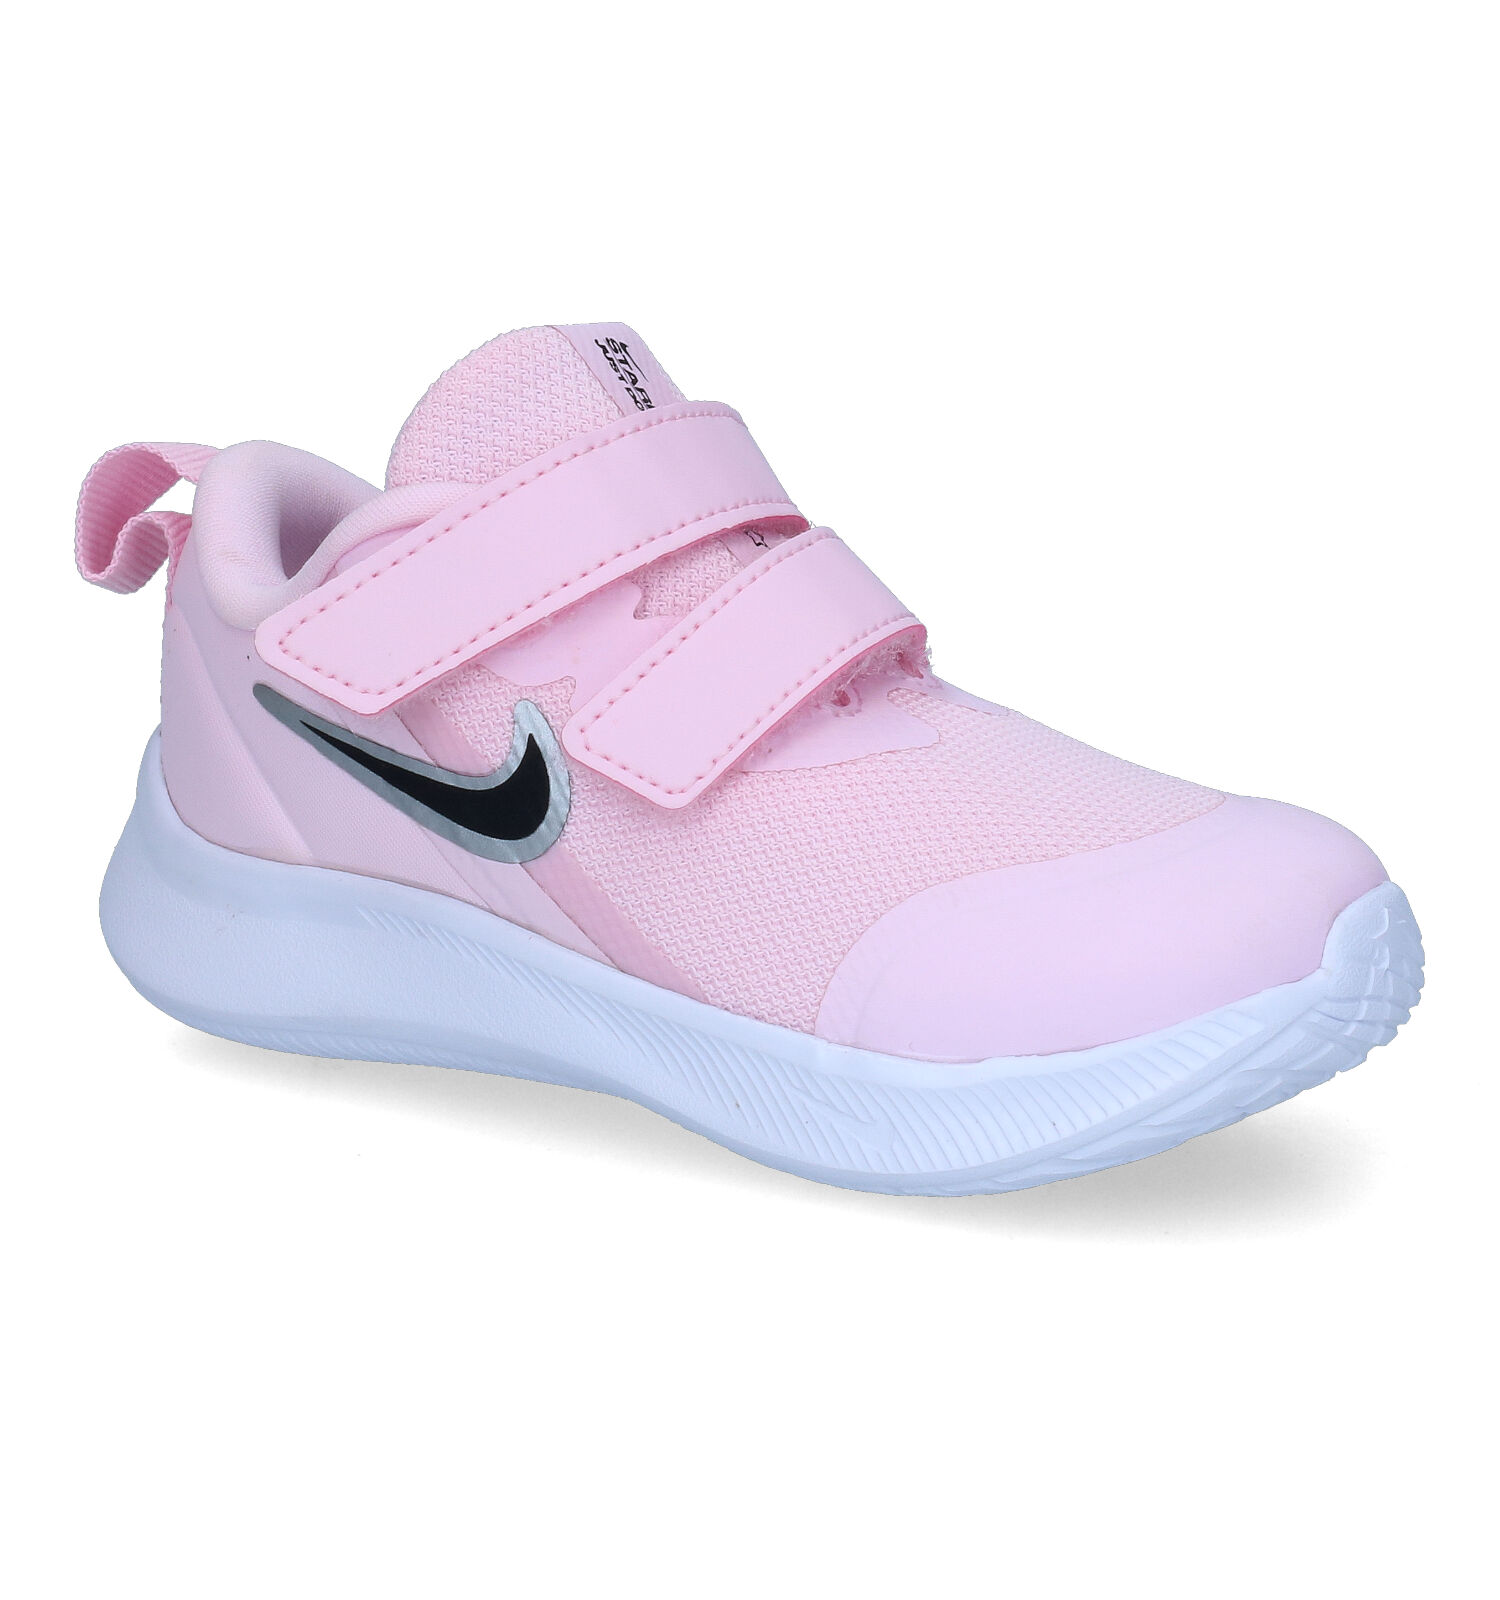 Chaussons Nike blanc et rose - Nike